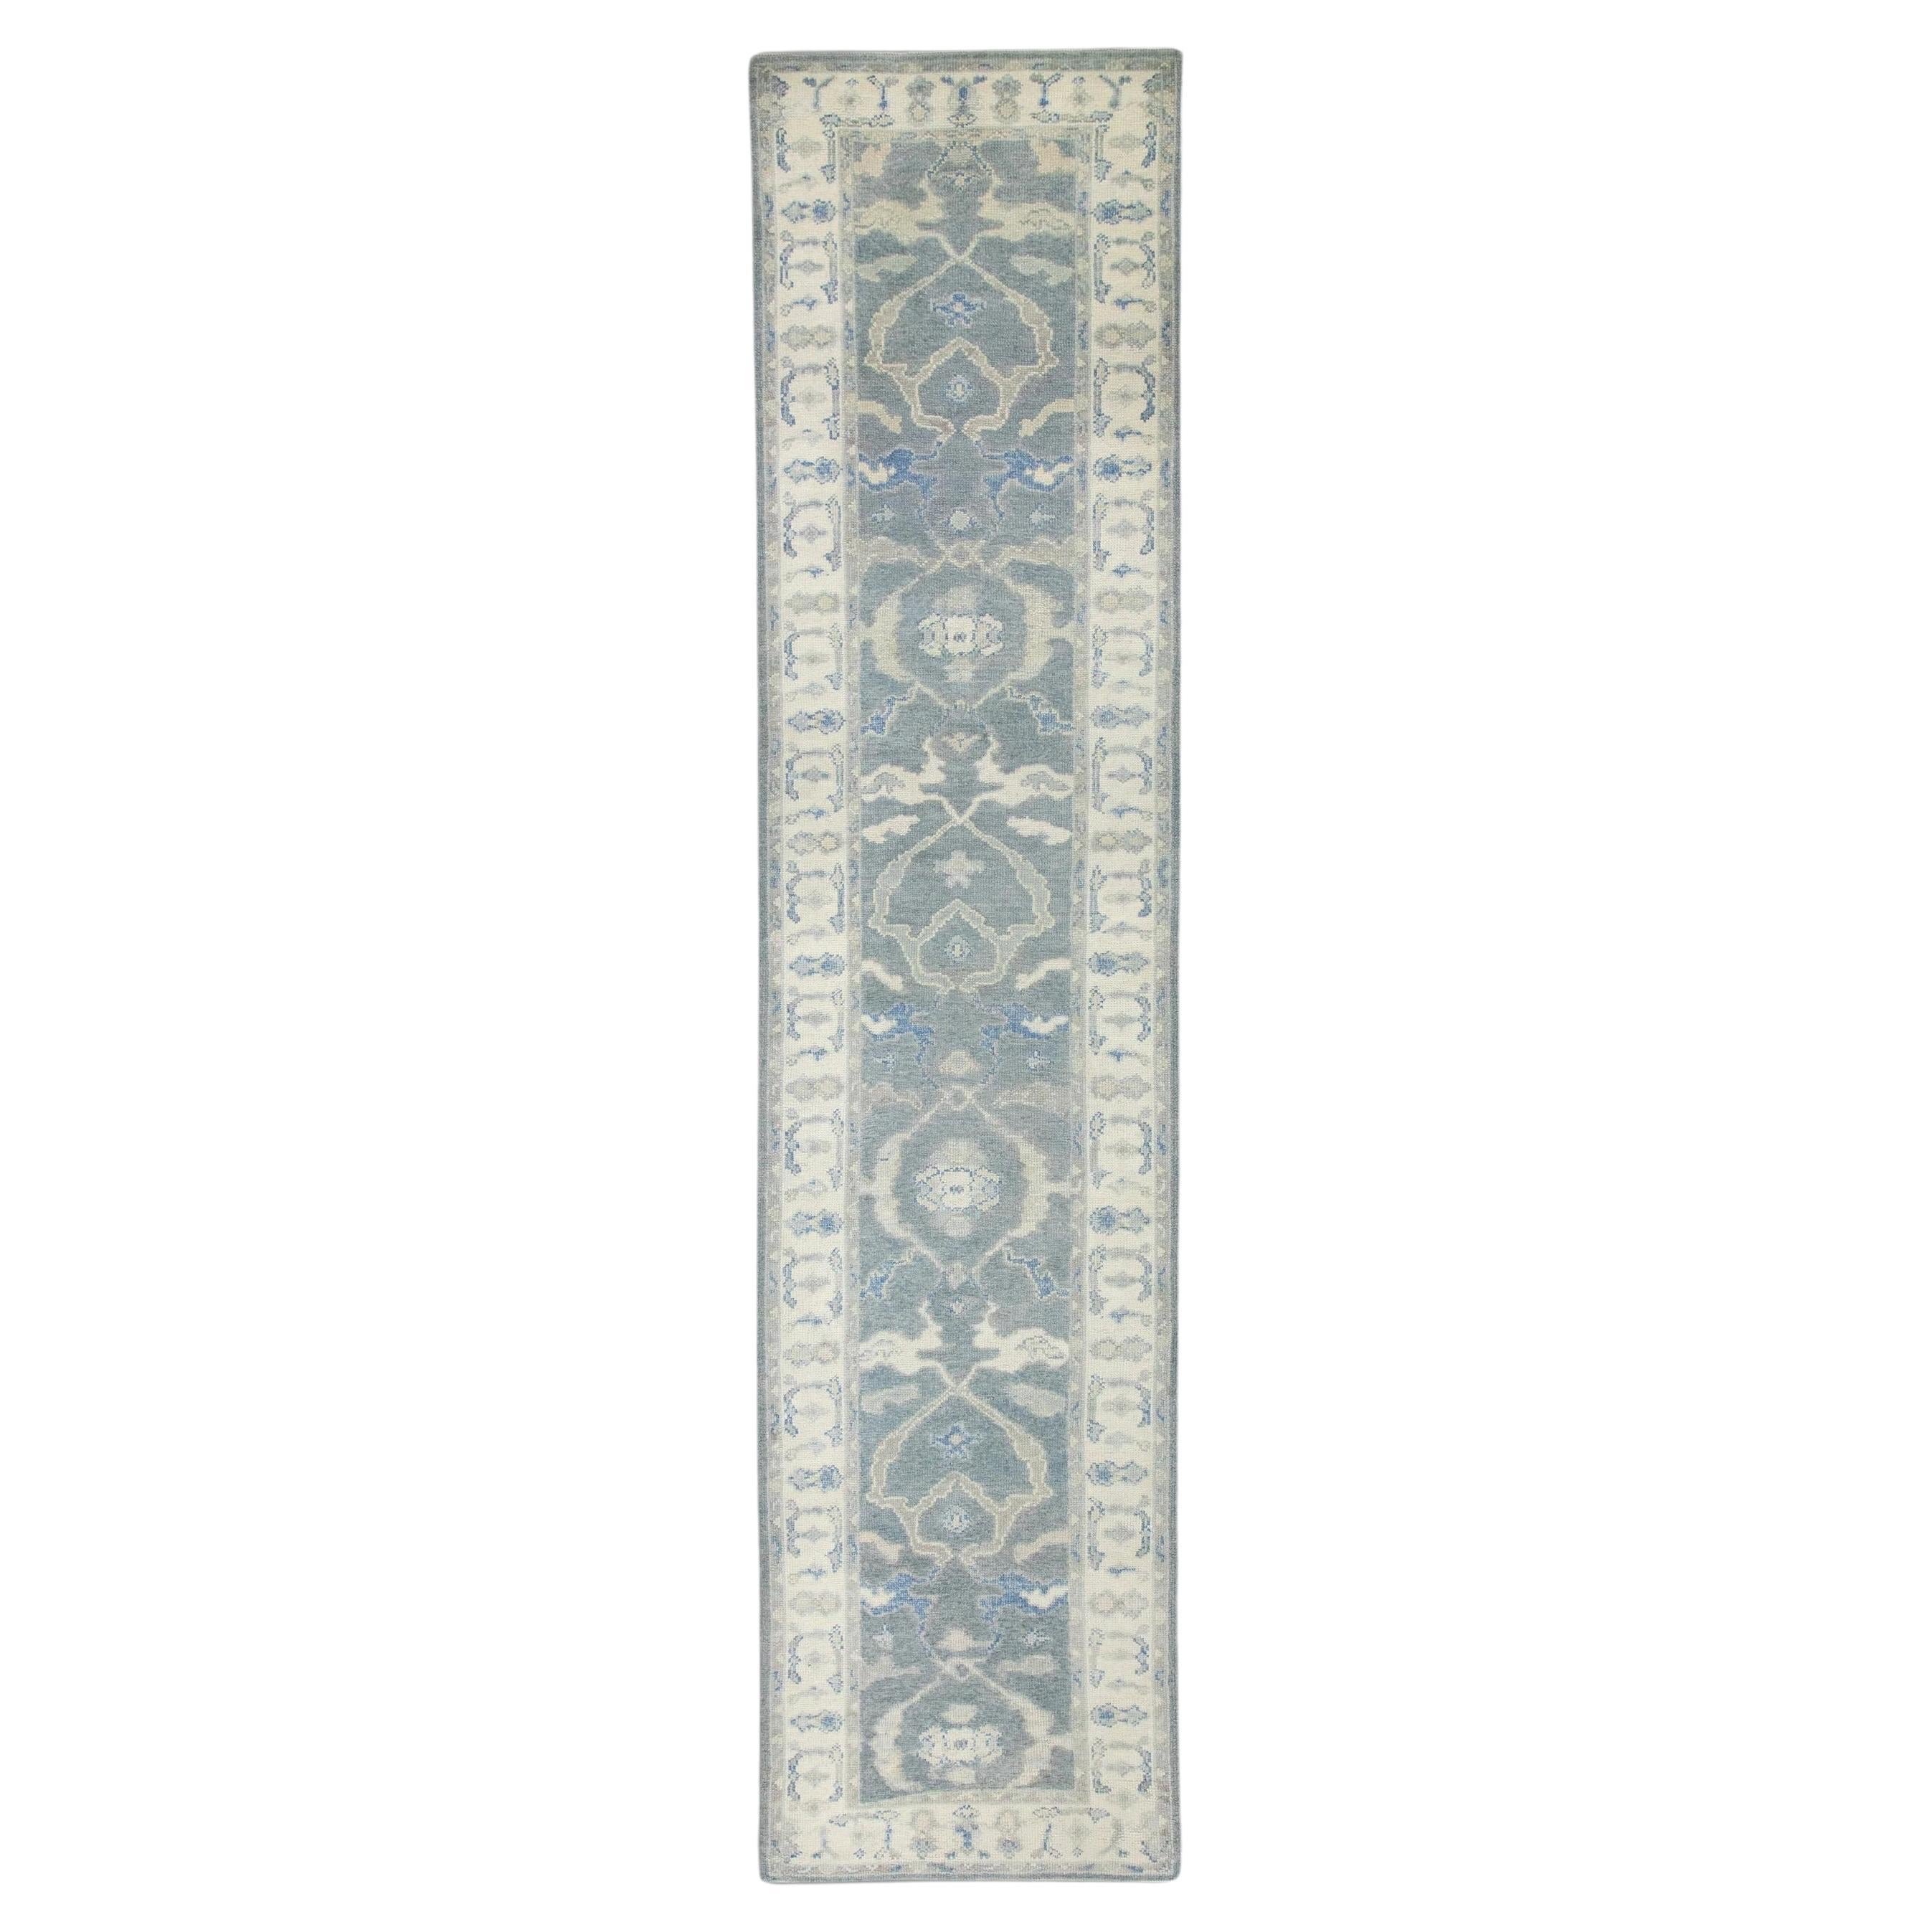 Blue Floral Design Handwoven Wool Turkish Oushak Runner 3' x 12'11"